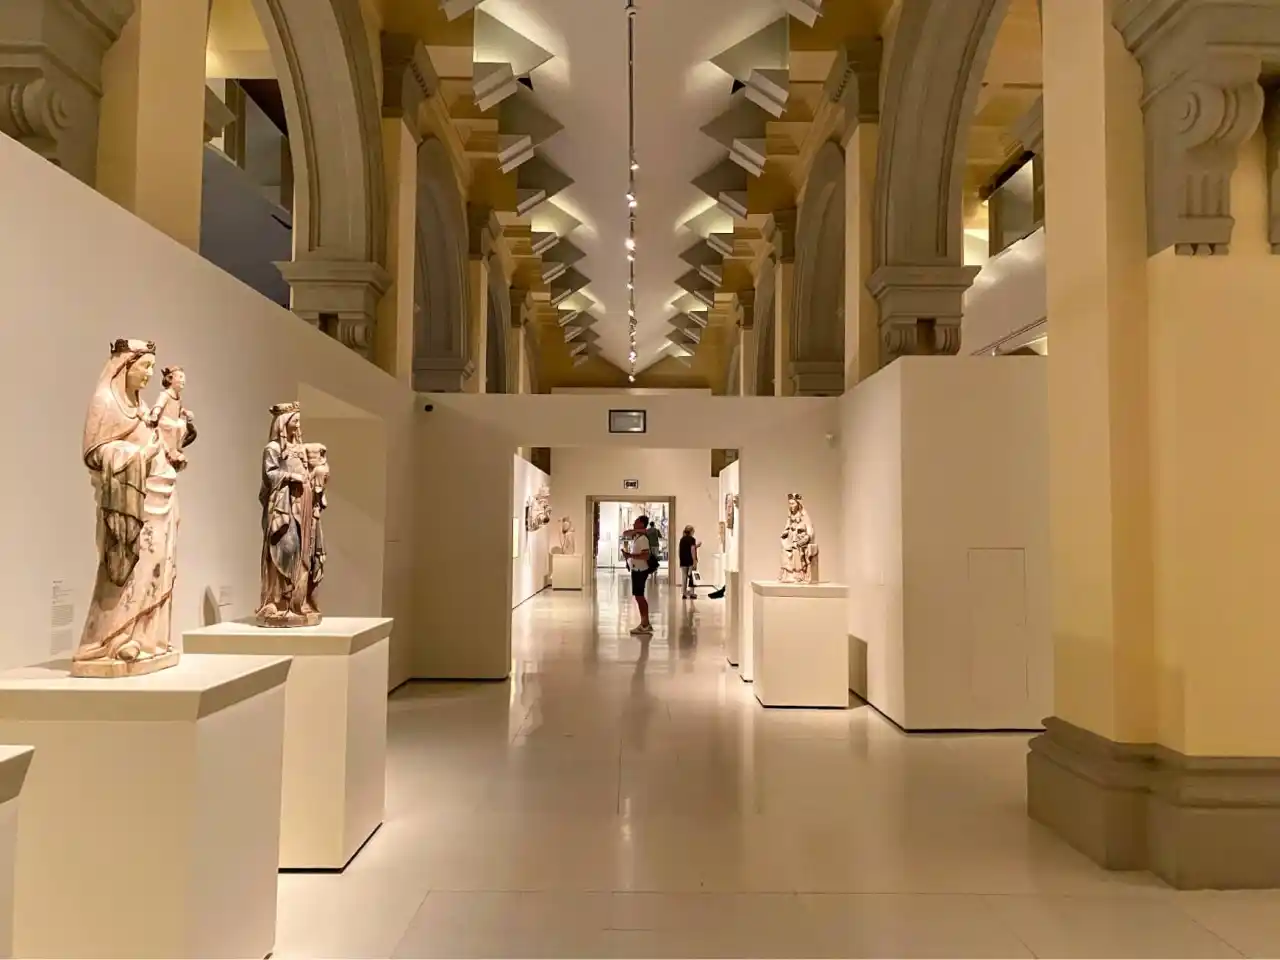 Gothic art collection at Museu Nacional d'Art de Catalunya